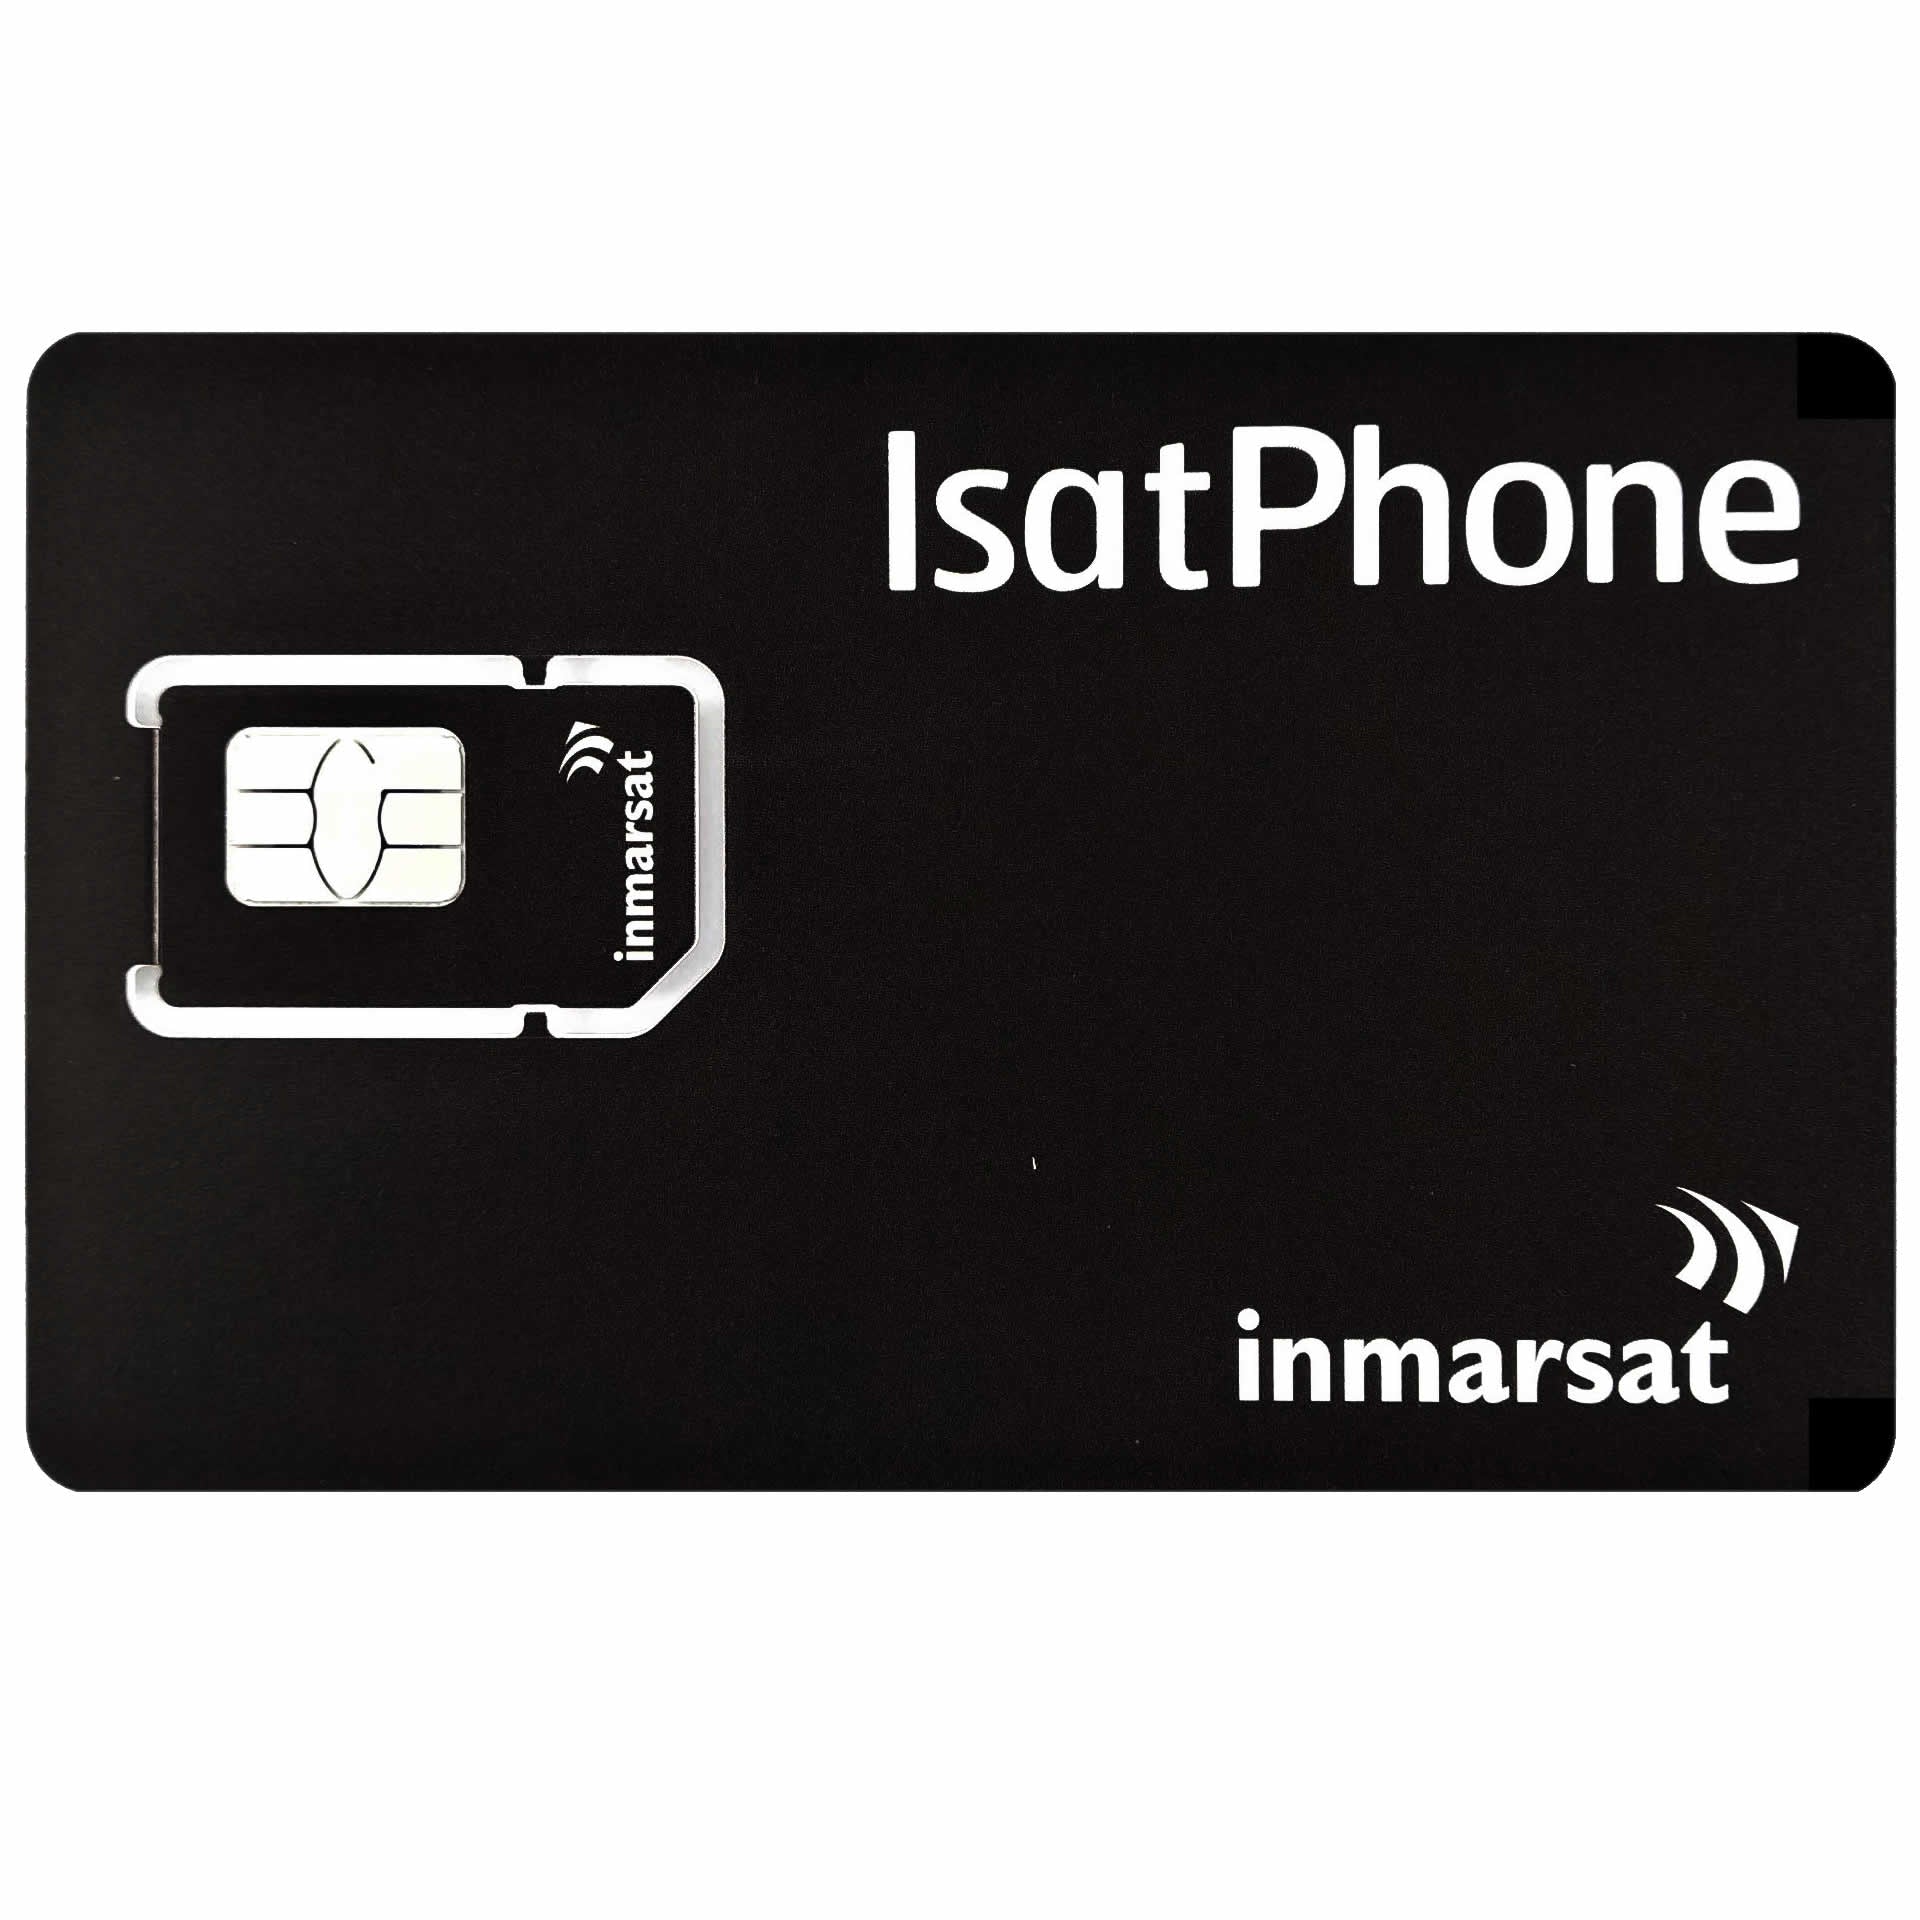 INMARSAT Rechargeable ISATPHONE Prepaid Card - 50 UNITS - 30 DAYS